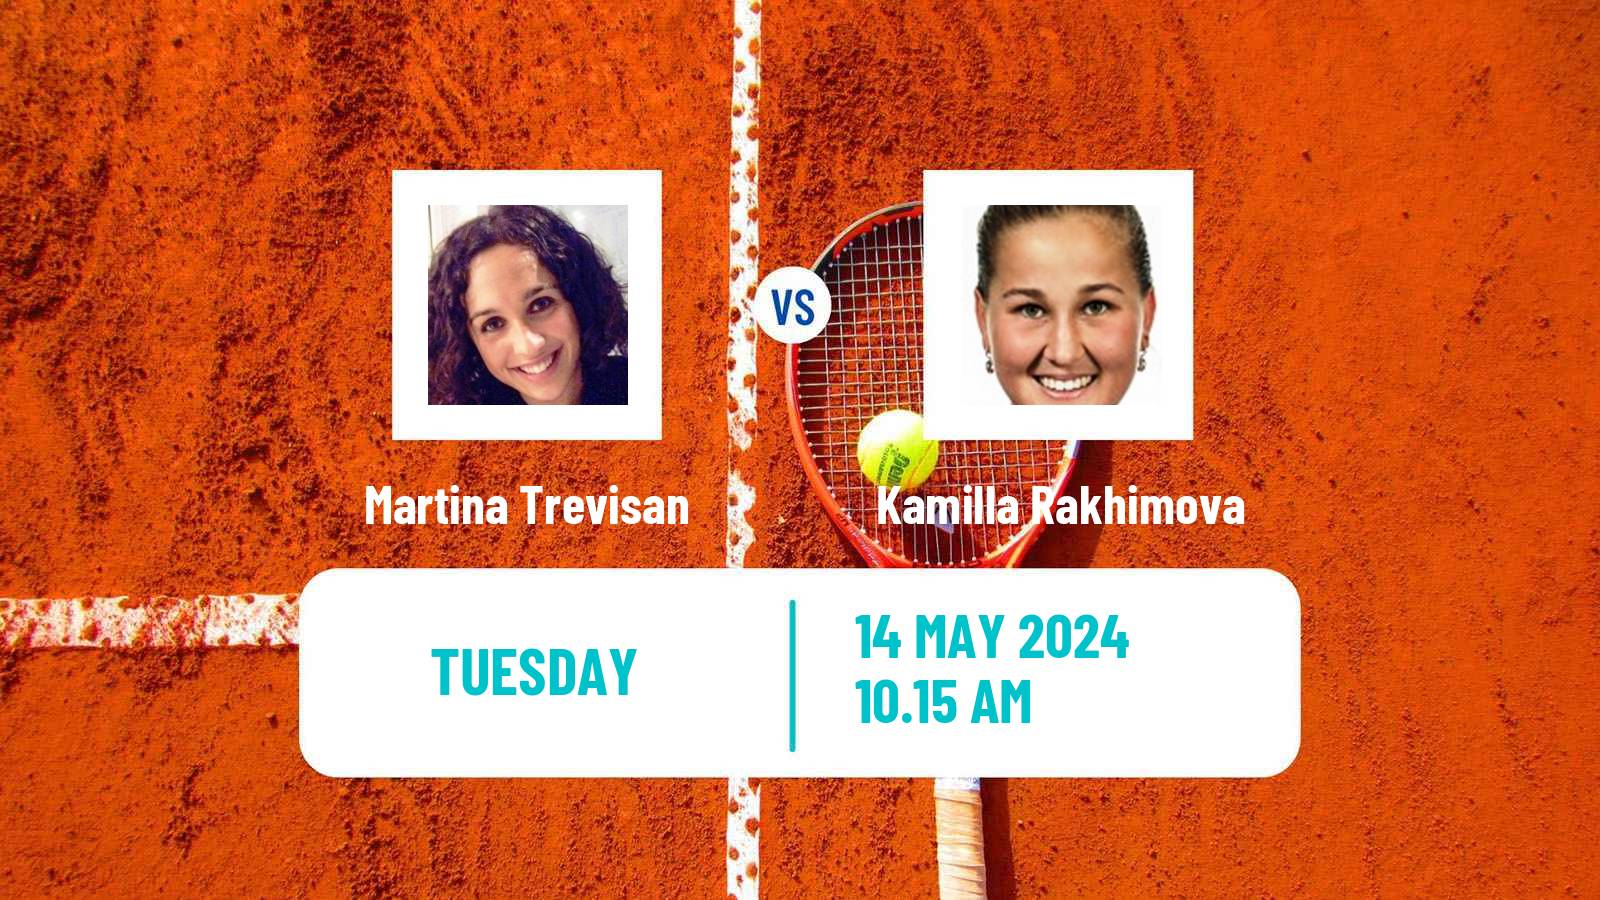 Tennis Parma Challenger Women 2024 Martina Trevisan - Kamilla Rakhimova